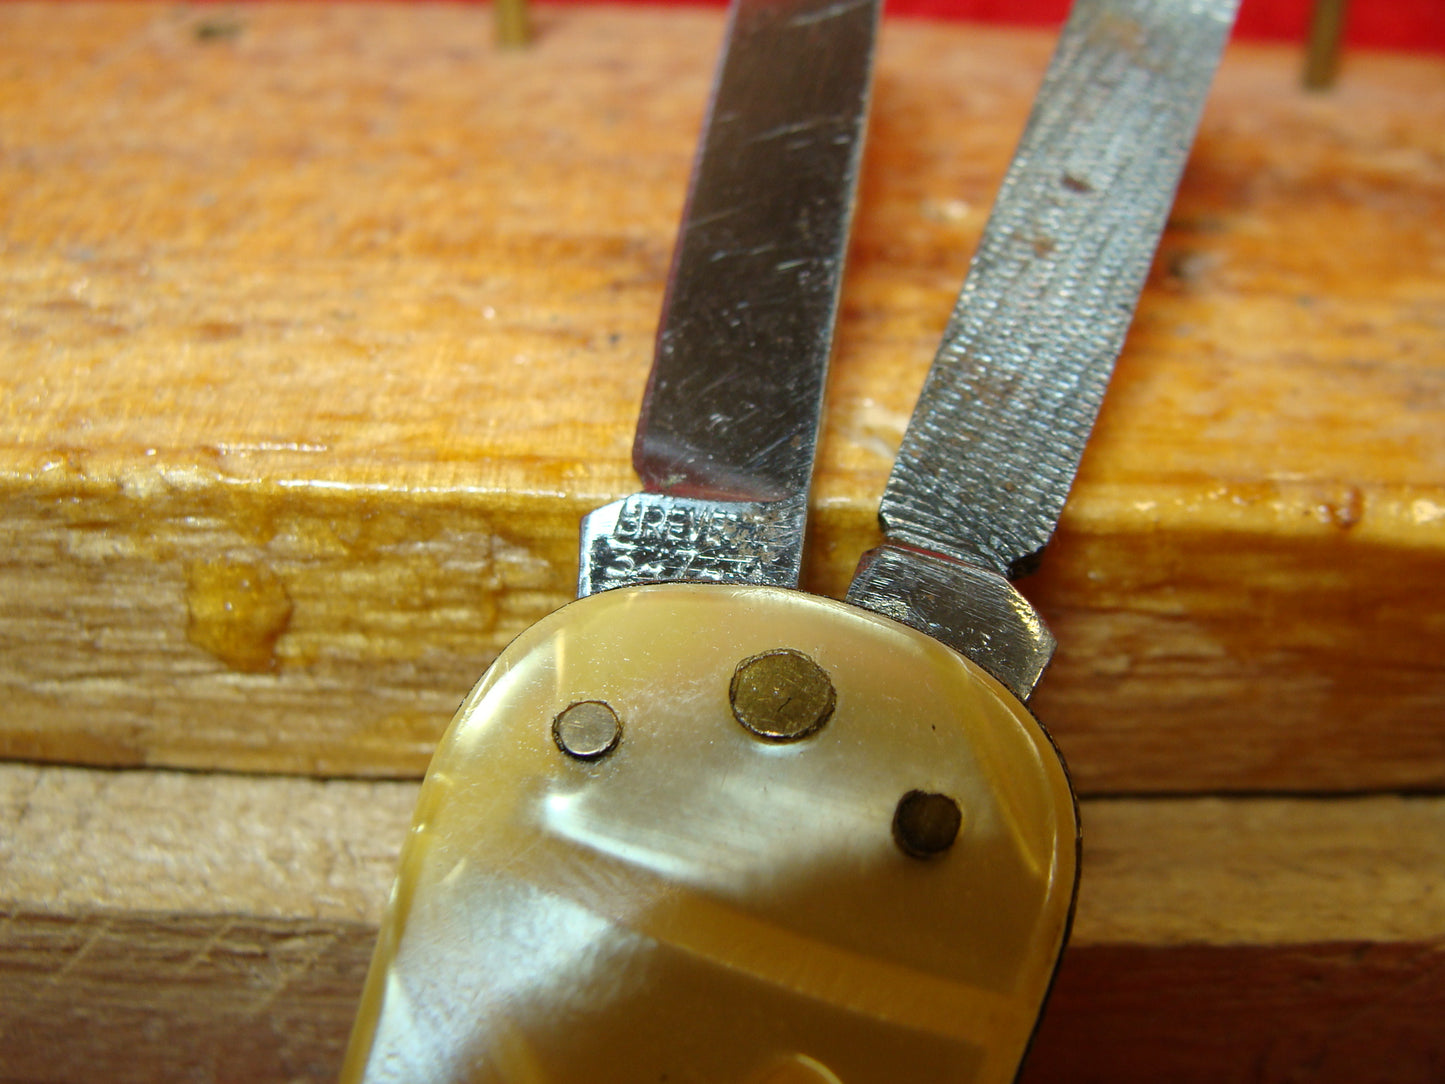 BREVETT 34749 ITALIAN 1950-58 PULL TAB ITALIAN AUTOMATIC KNIFE DOUBLE BLADE CRACKED ICE CELLULOID HANDLES, ETCHED: RICORDO VENEZIA